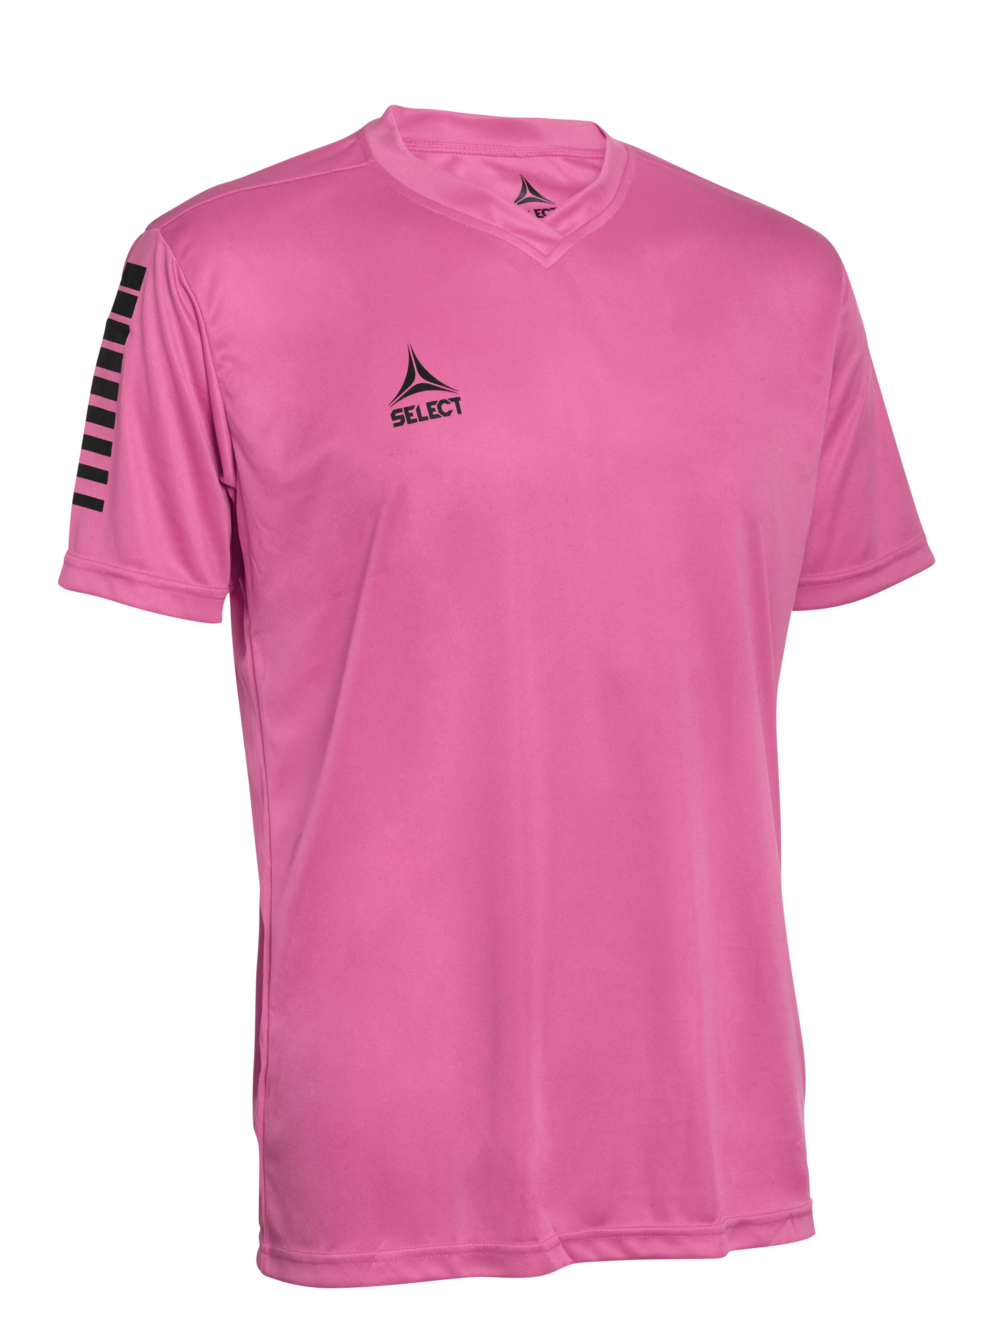 pisa_player_shirt_s-s_pink